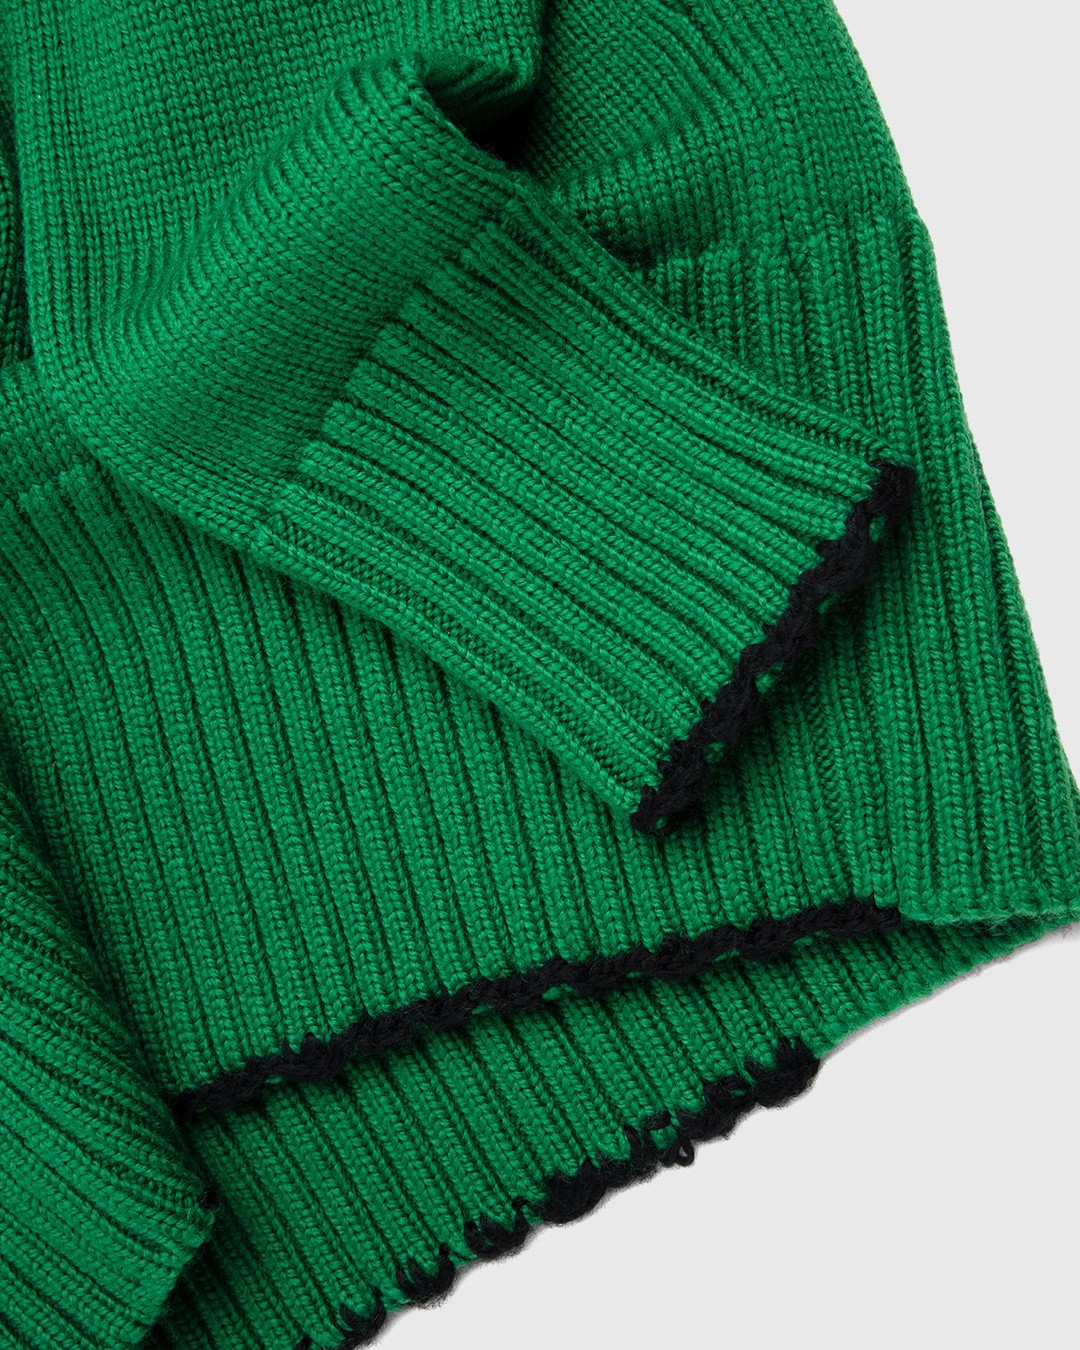 Maison Margiela – Summer Camp Sweater Green - Knitwear - Green - Image 5